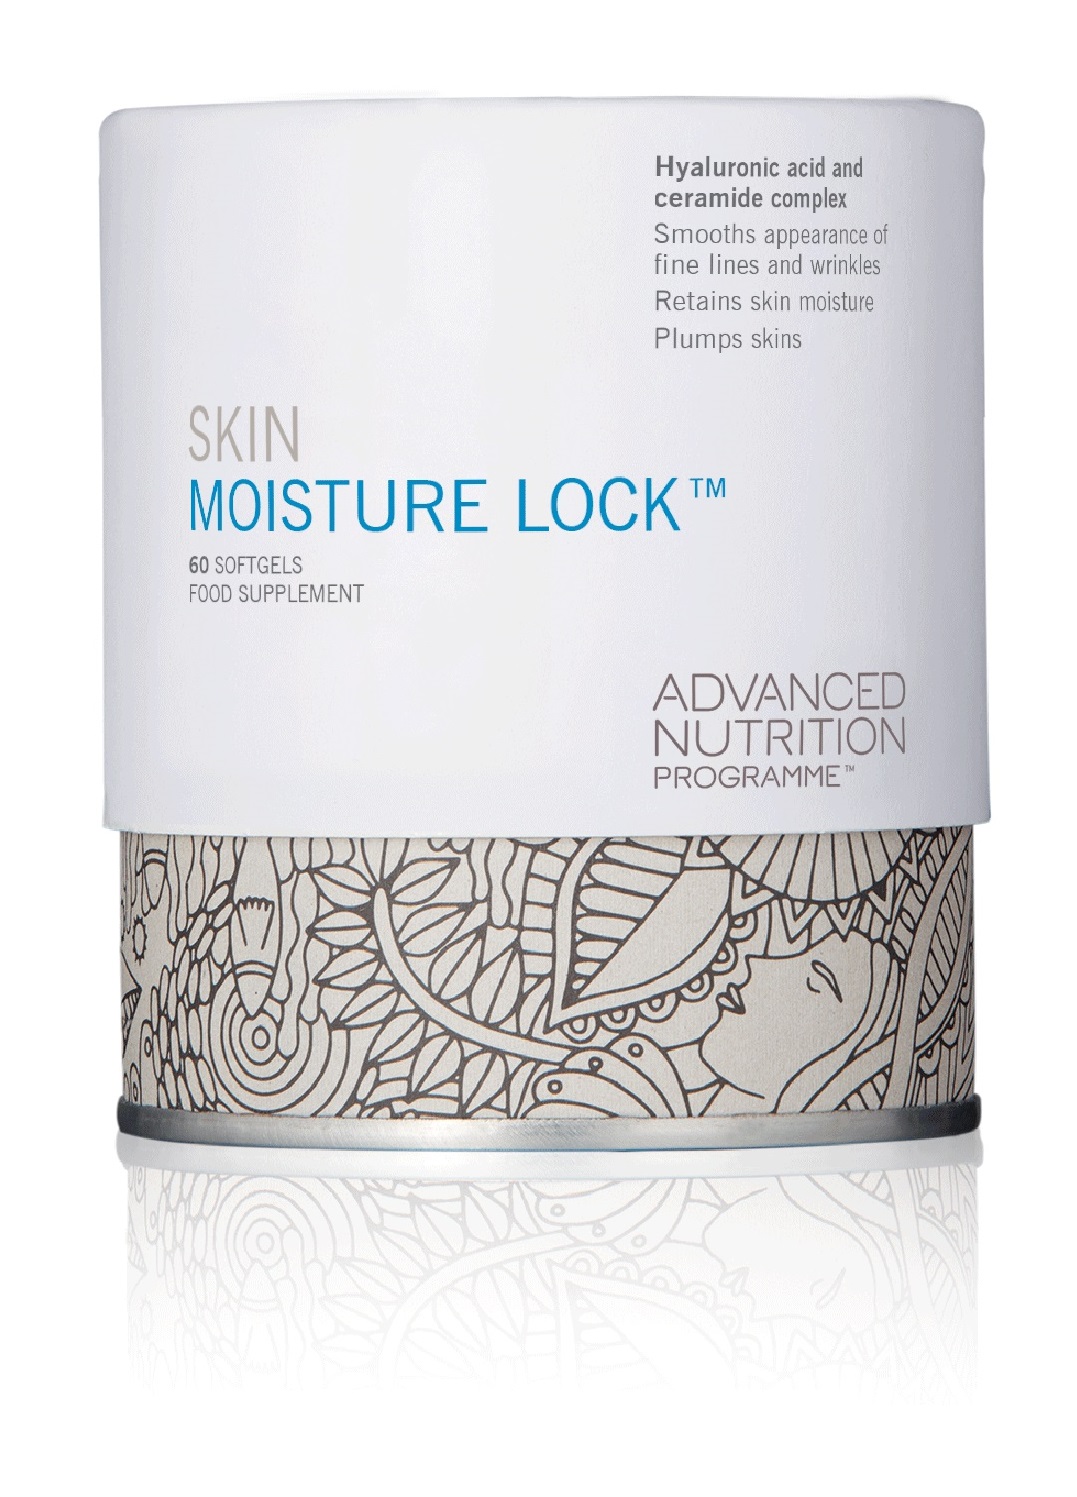 Advanced Nutrition Programme's Skin Moisture Lock™ 